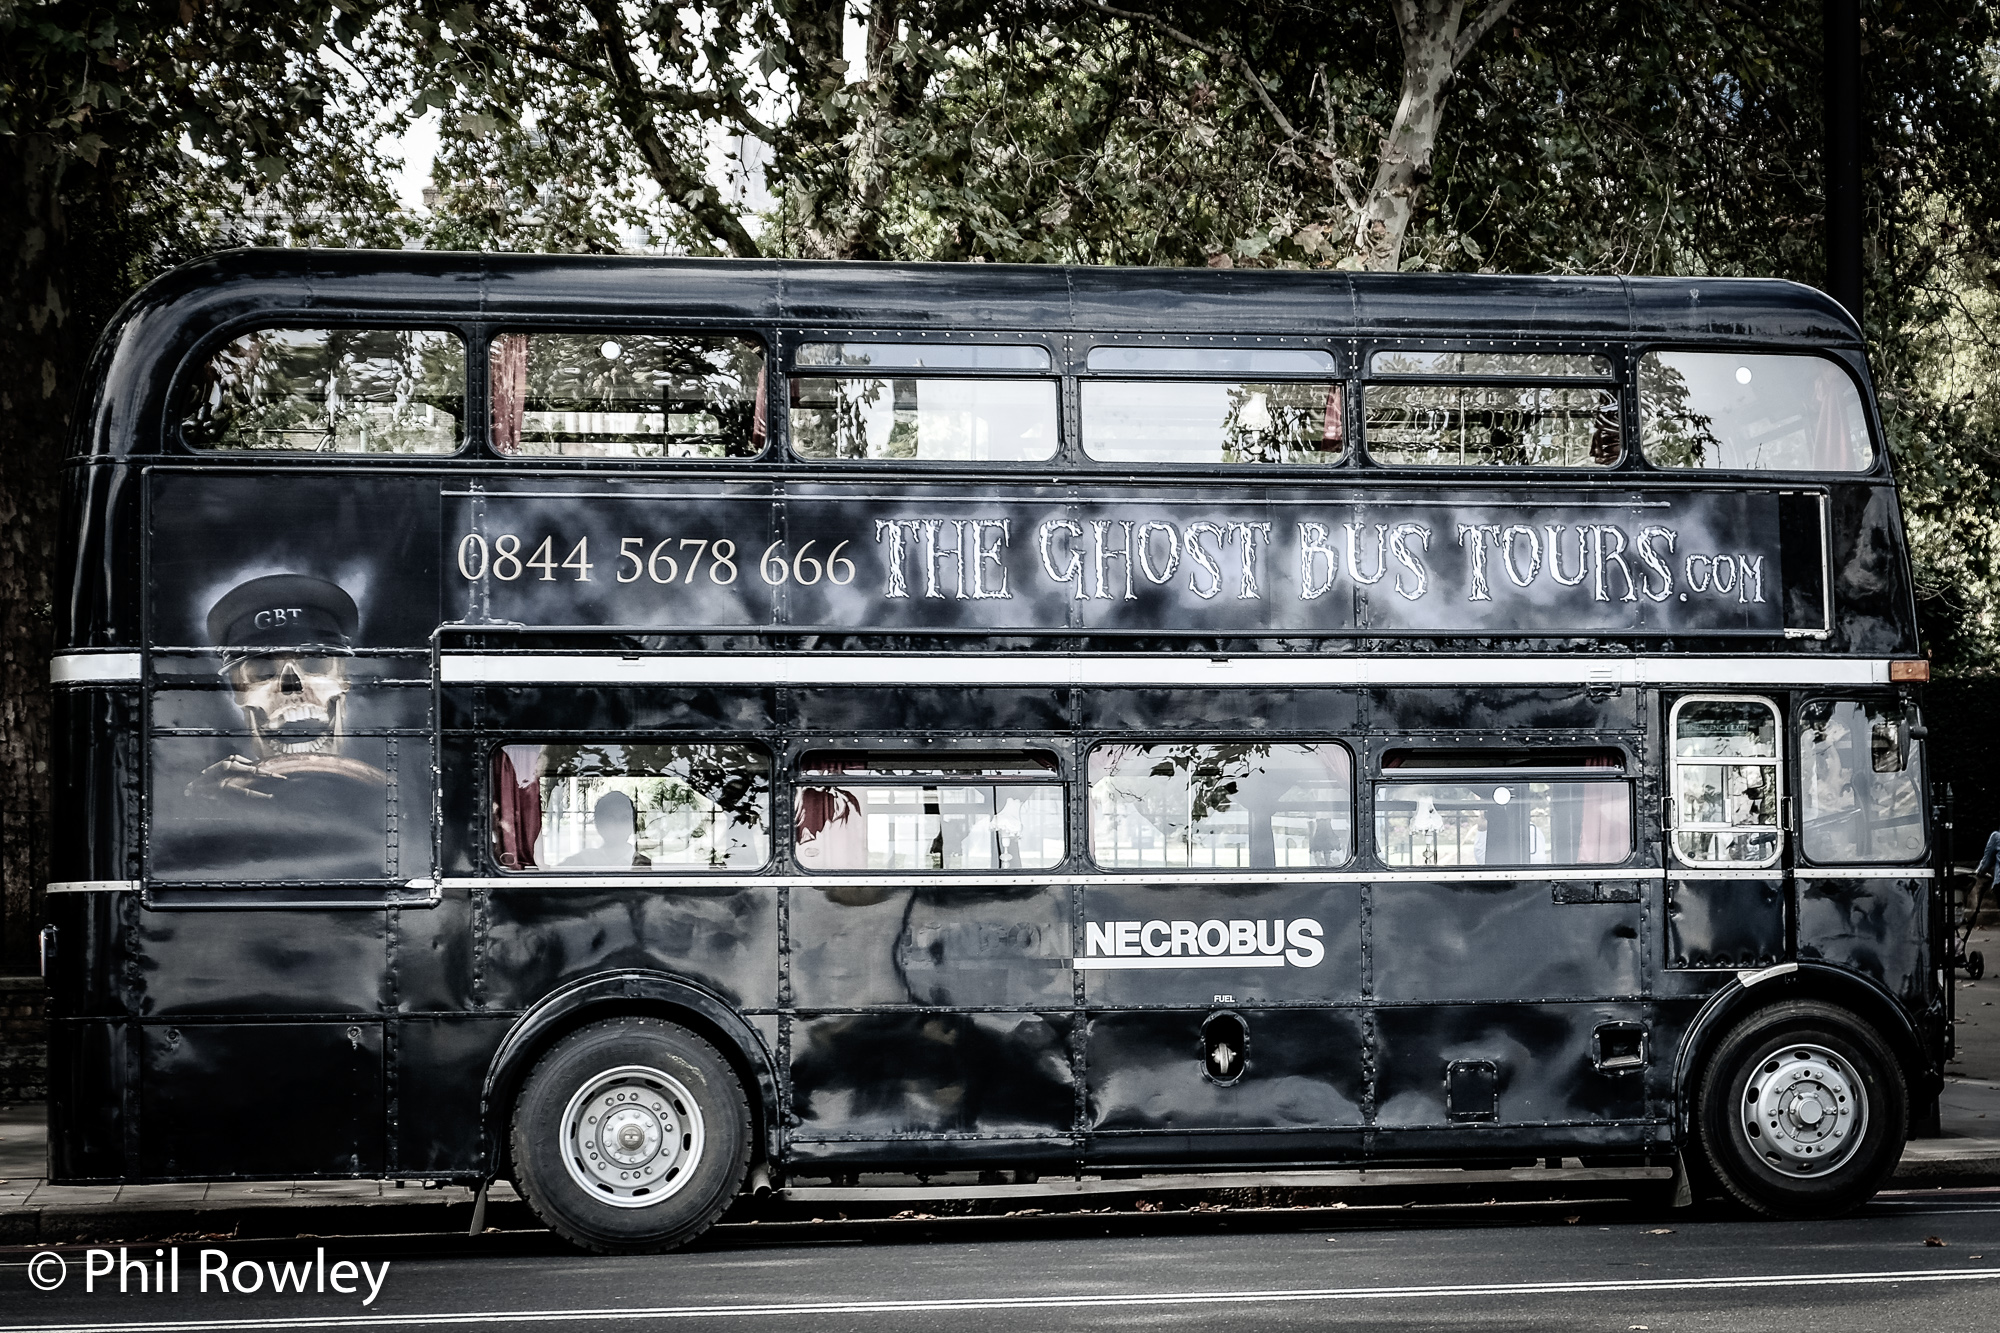 Bus London